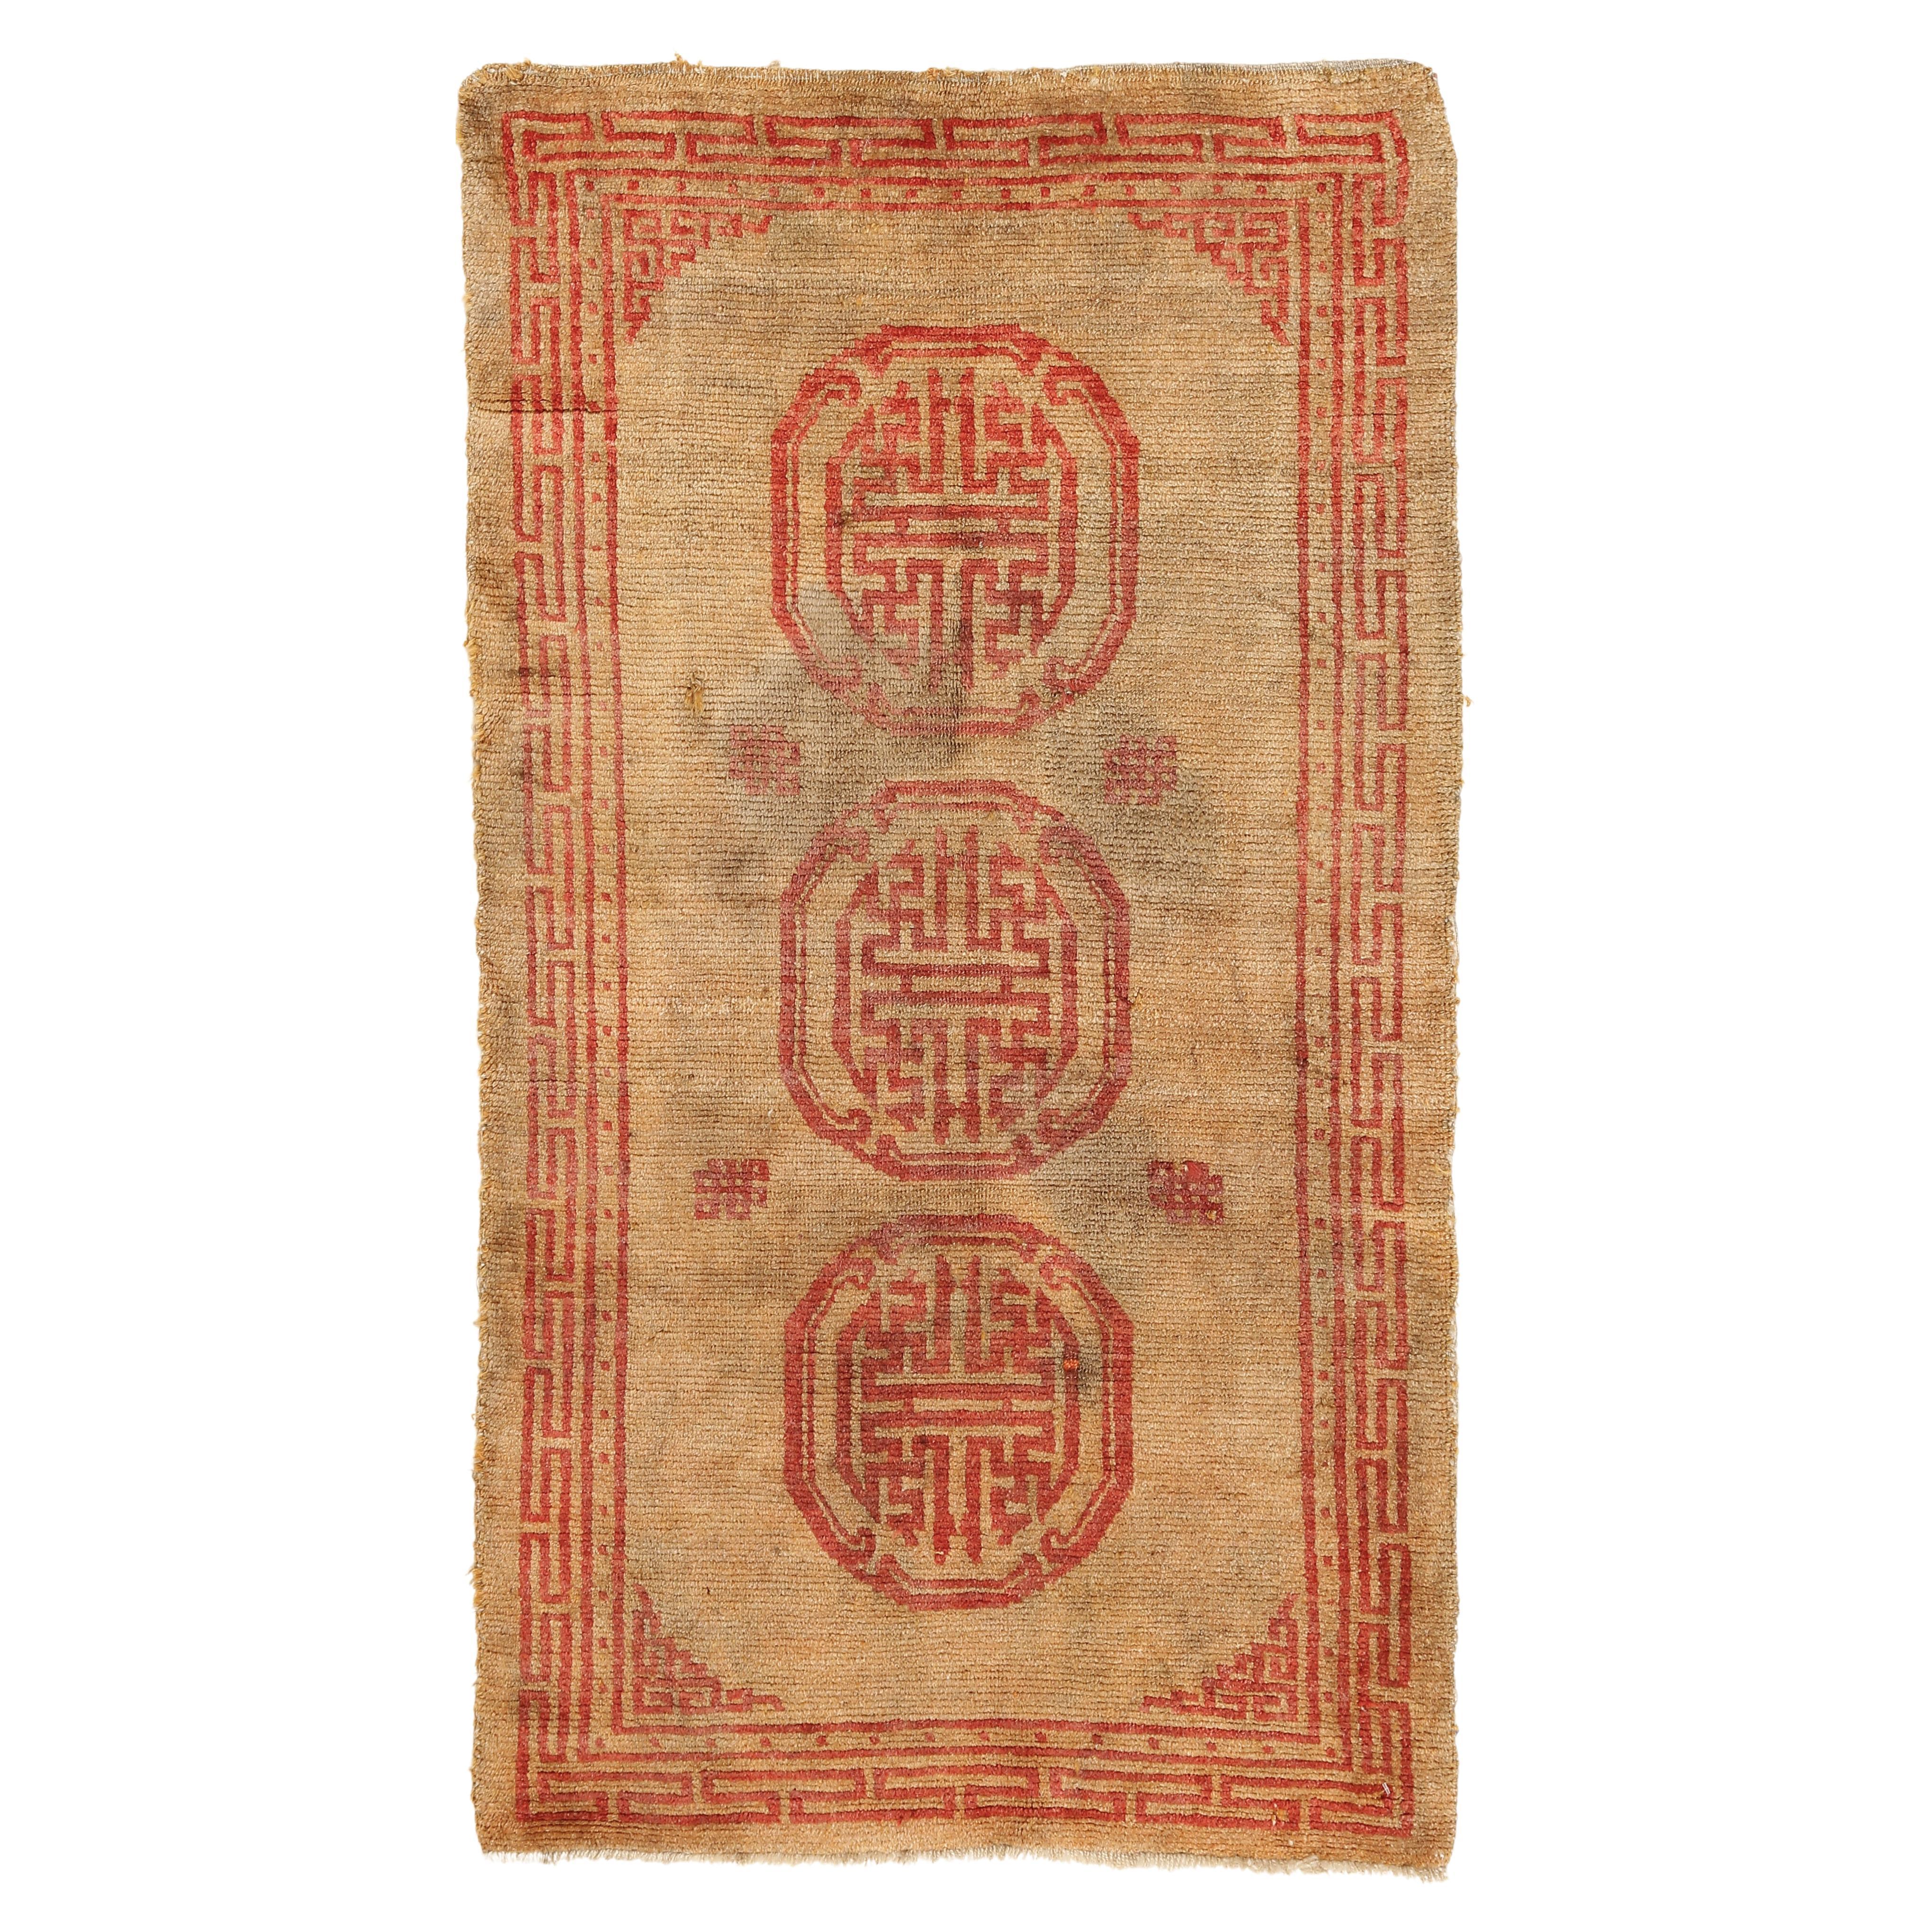 Antique Tibetan Meditation Rug with Three Mandalas